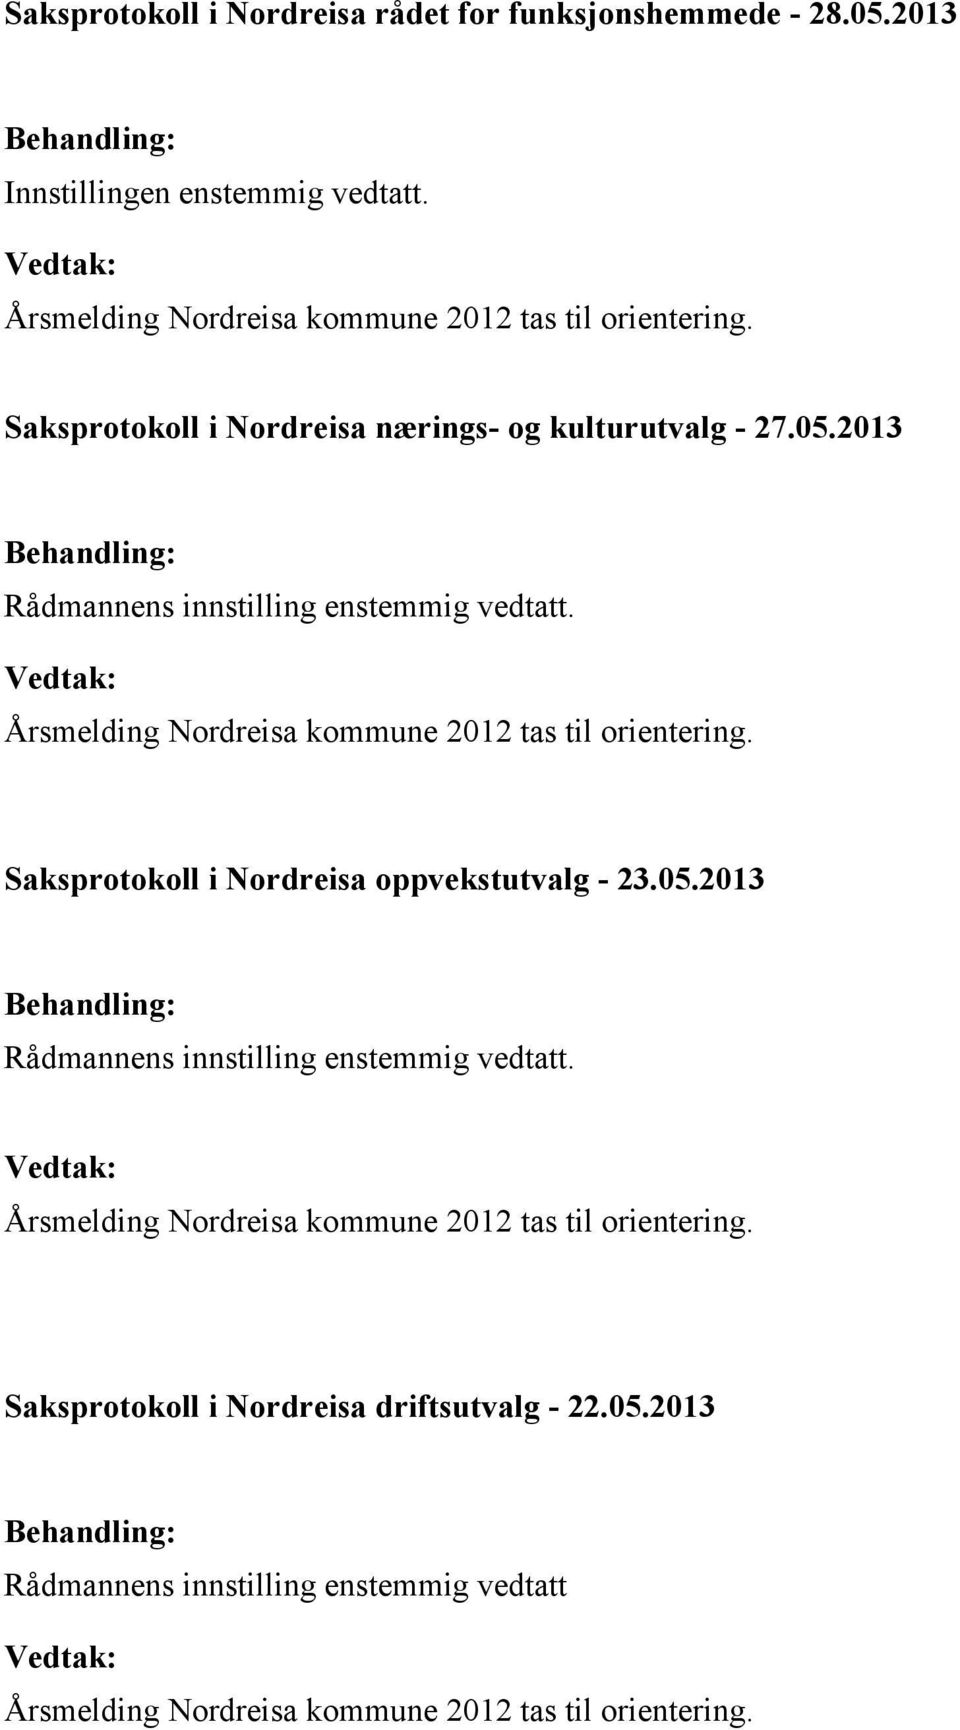 2013 Rådmannens innstilling enstemmig vedtatt. Saksprotokoll i Nordreisa oppvekstutvalg - 23.05.